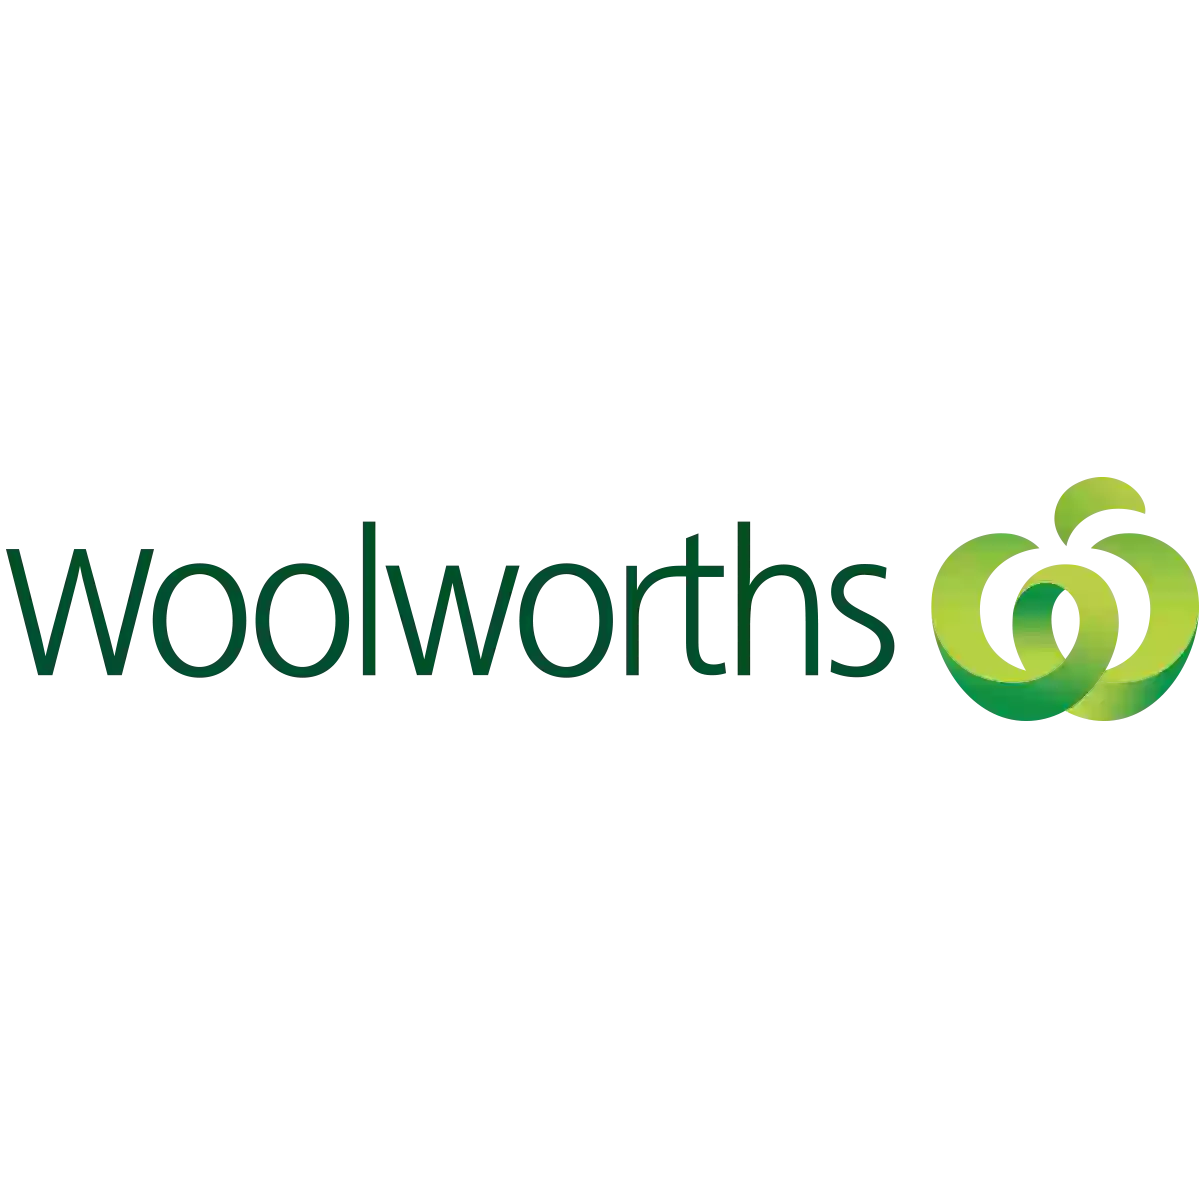 Woolworths Conder